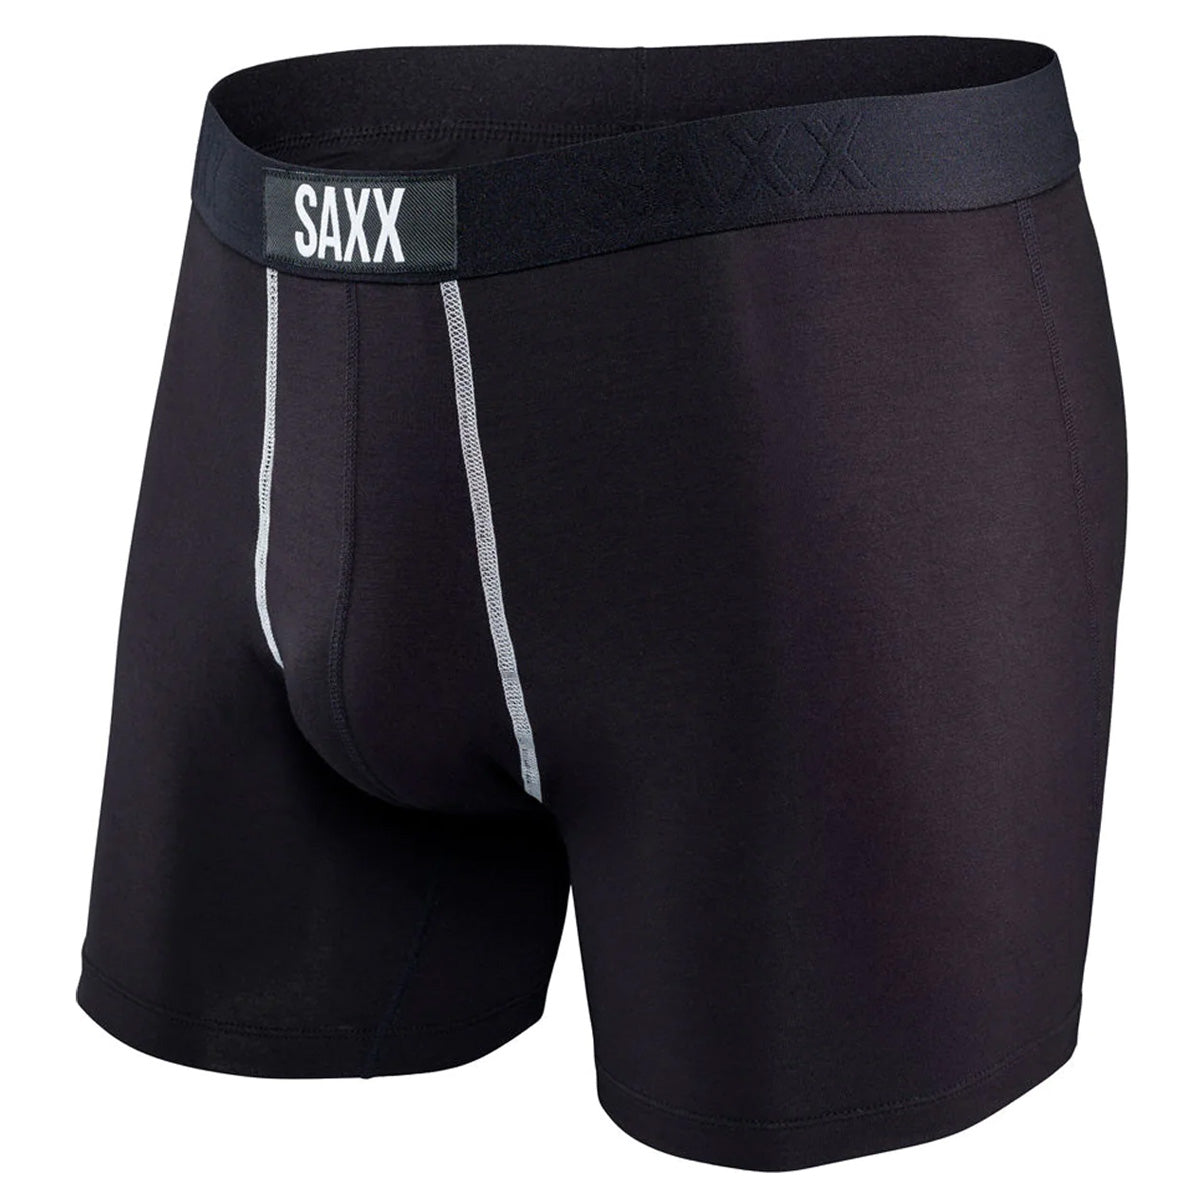 Saxx Vibe Boxer Men's Bottom Underwear 